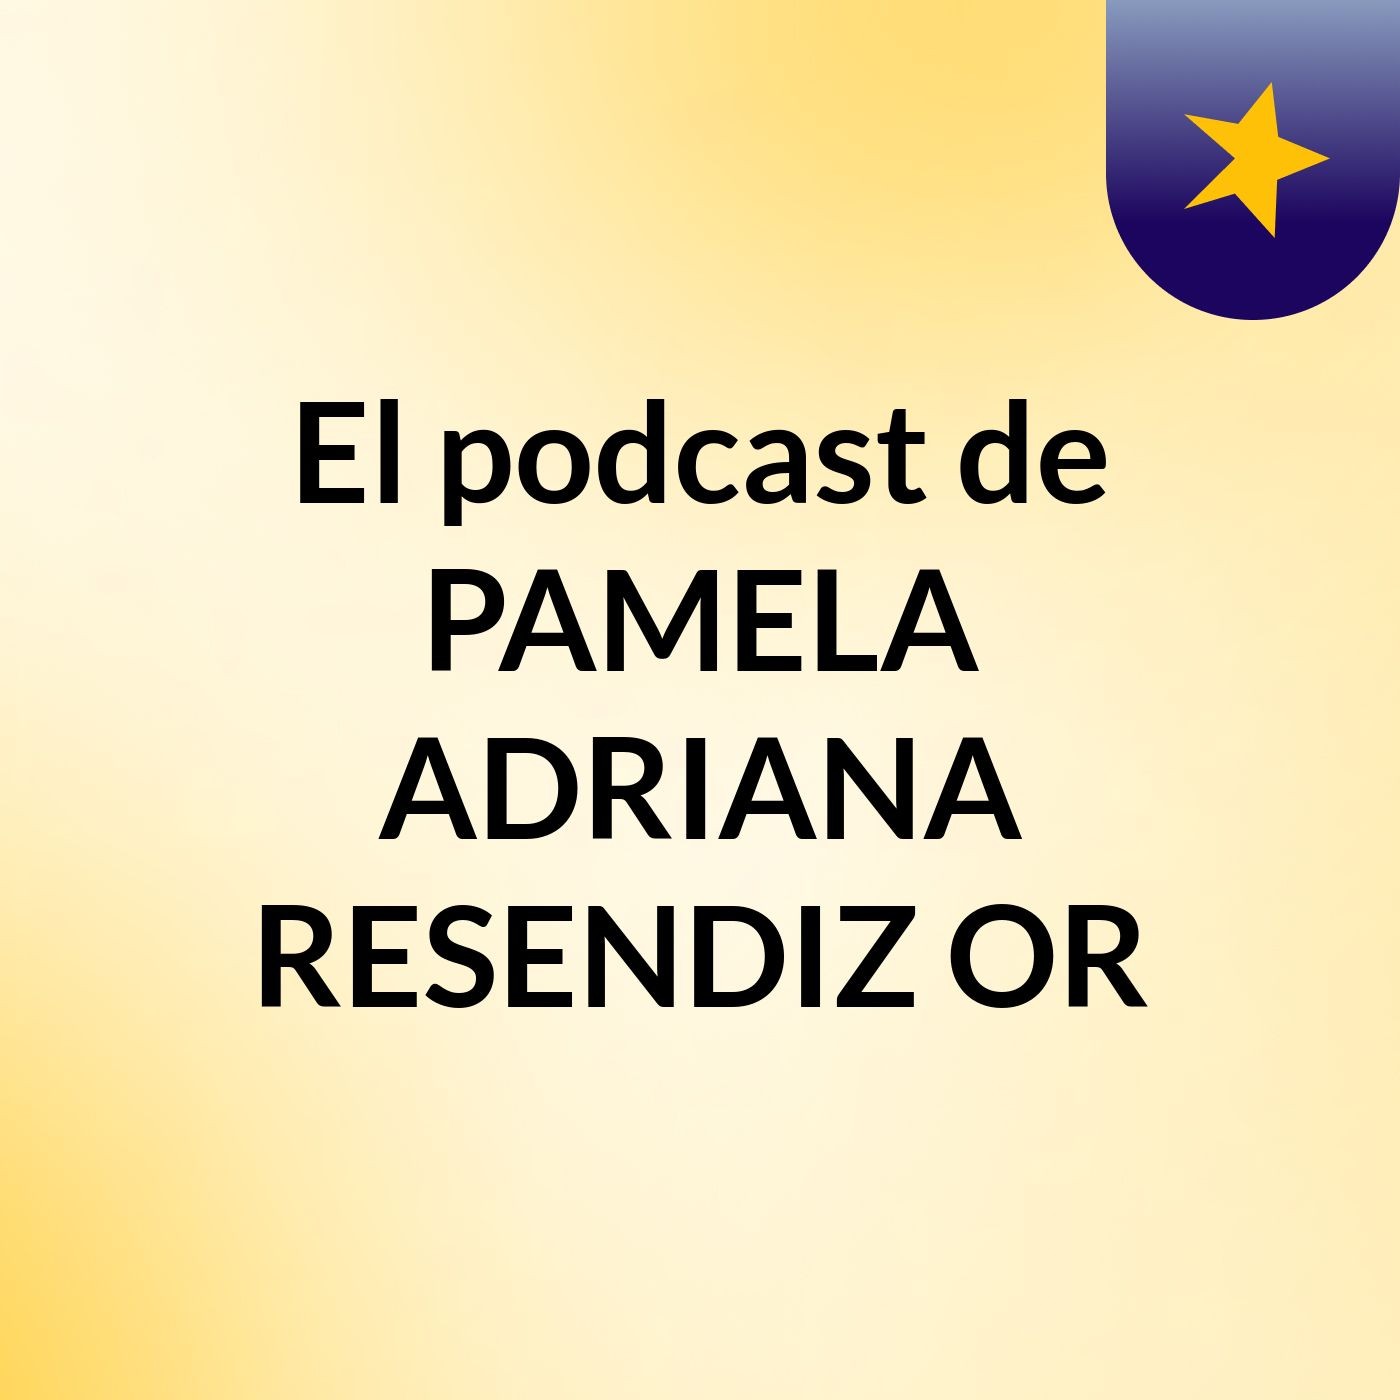 El podcast de PAMELA ADRIANA RESENDIZ OR